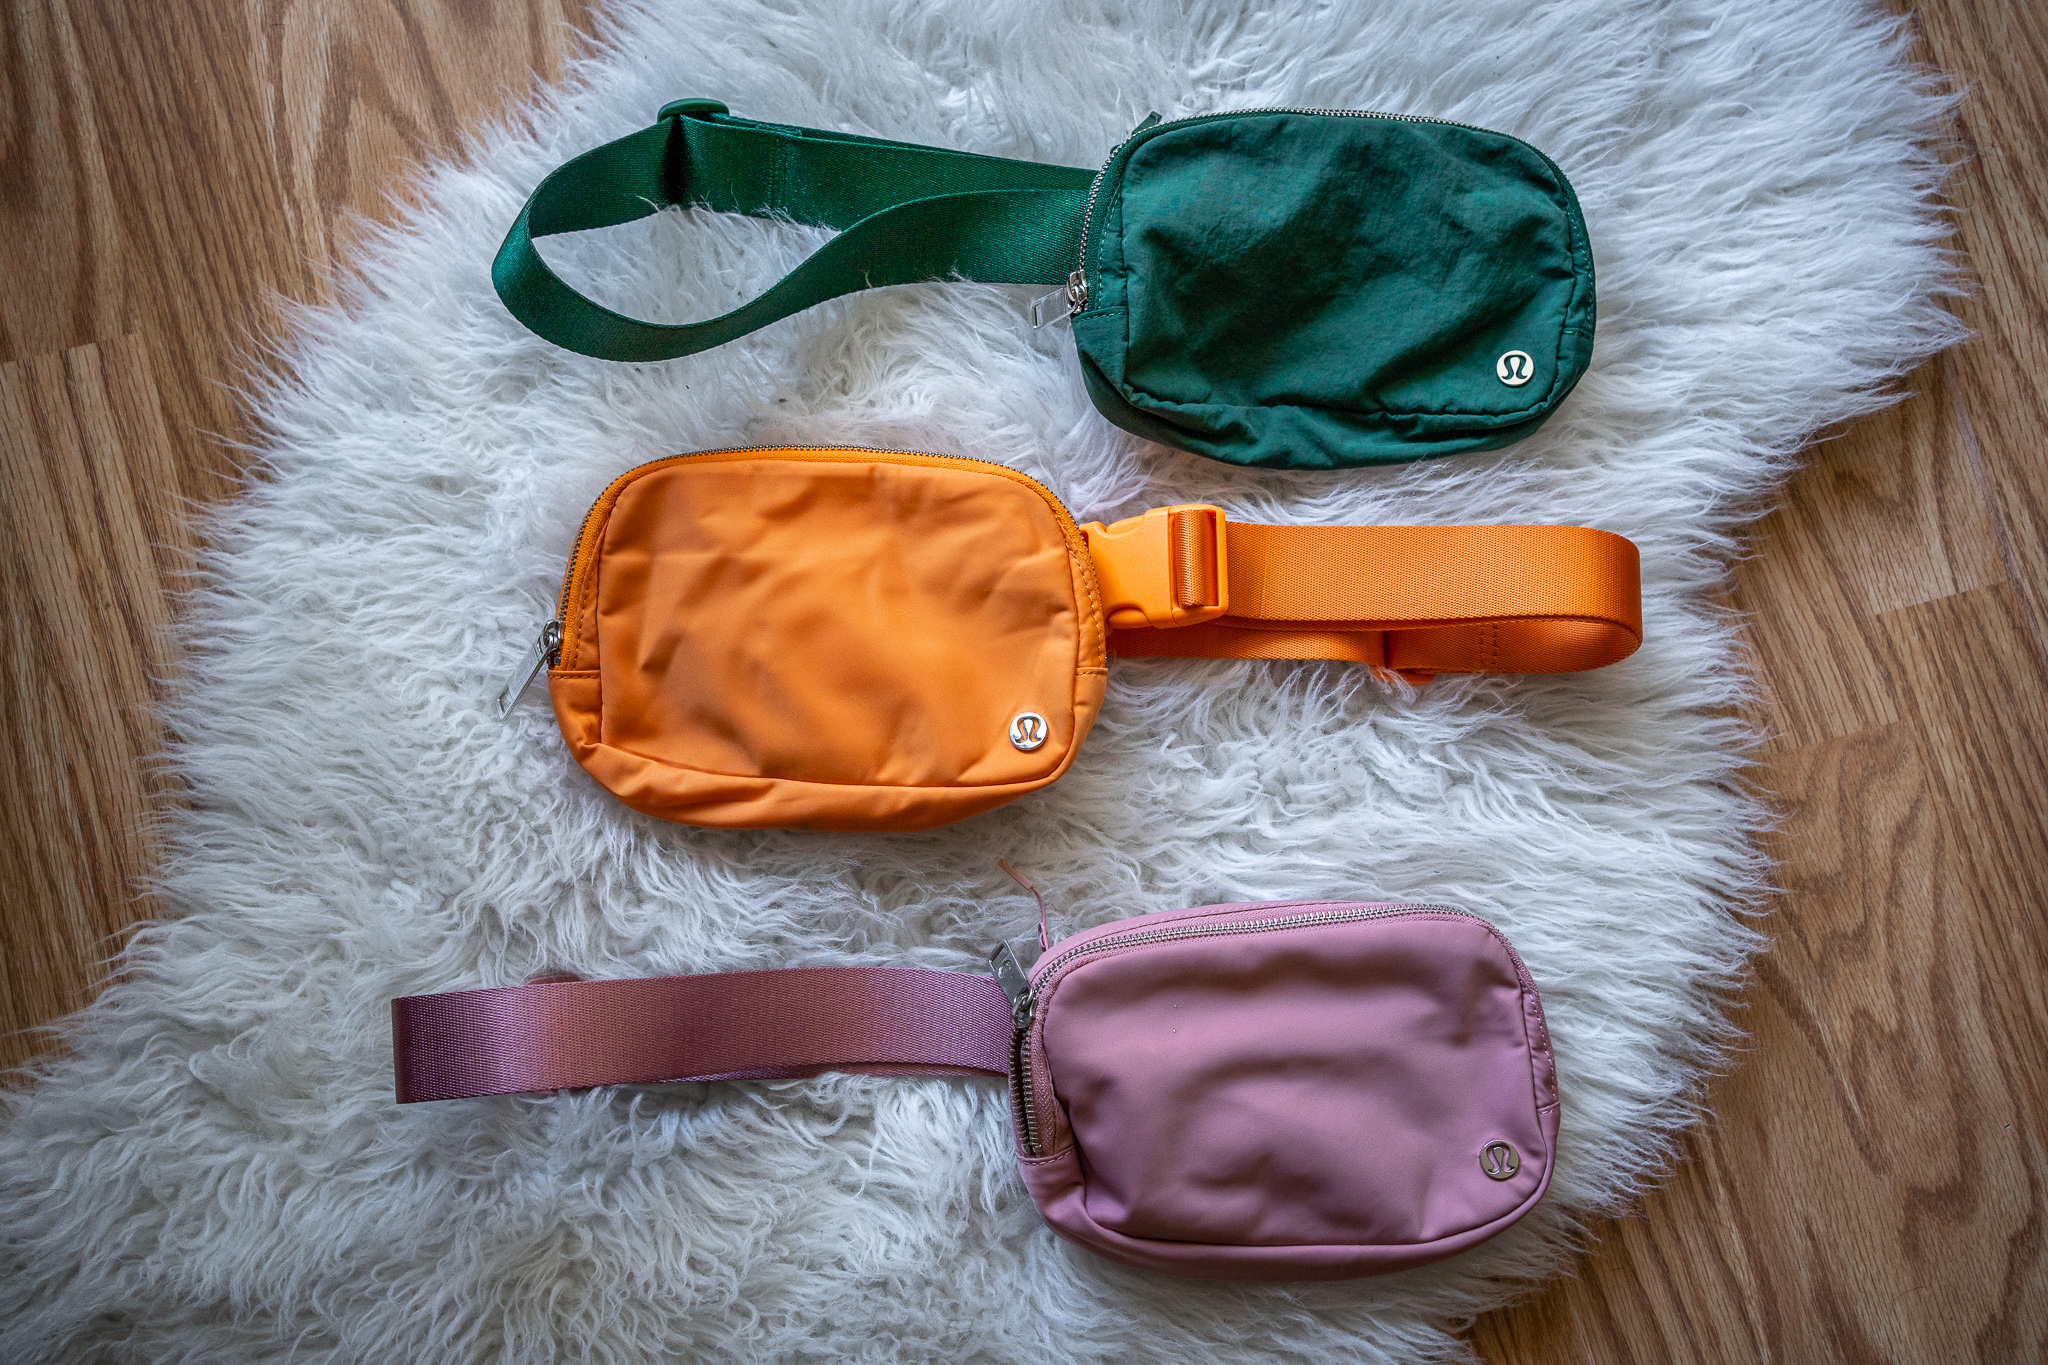 lululemon Everywhere Belt Bag Review Schimiggy everglad green tiger orange savannah pink